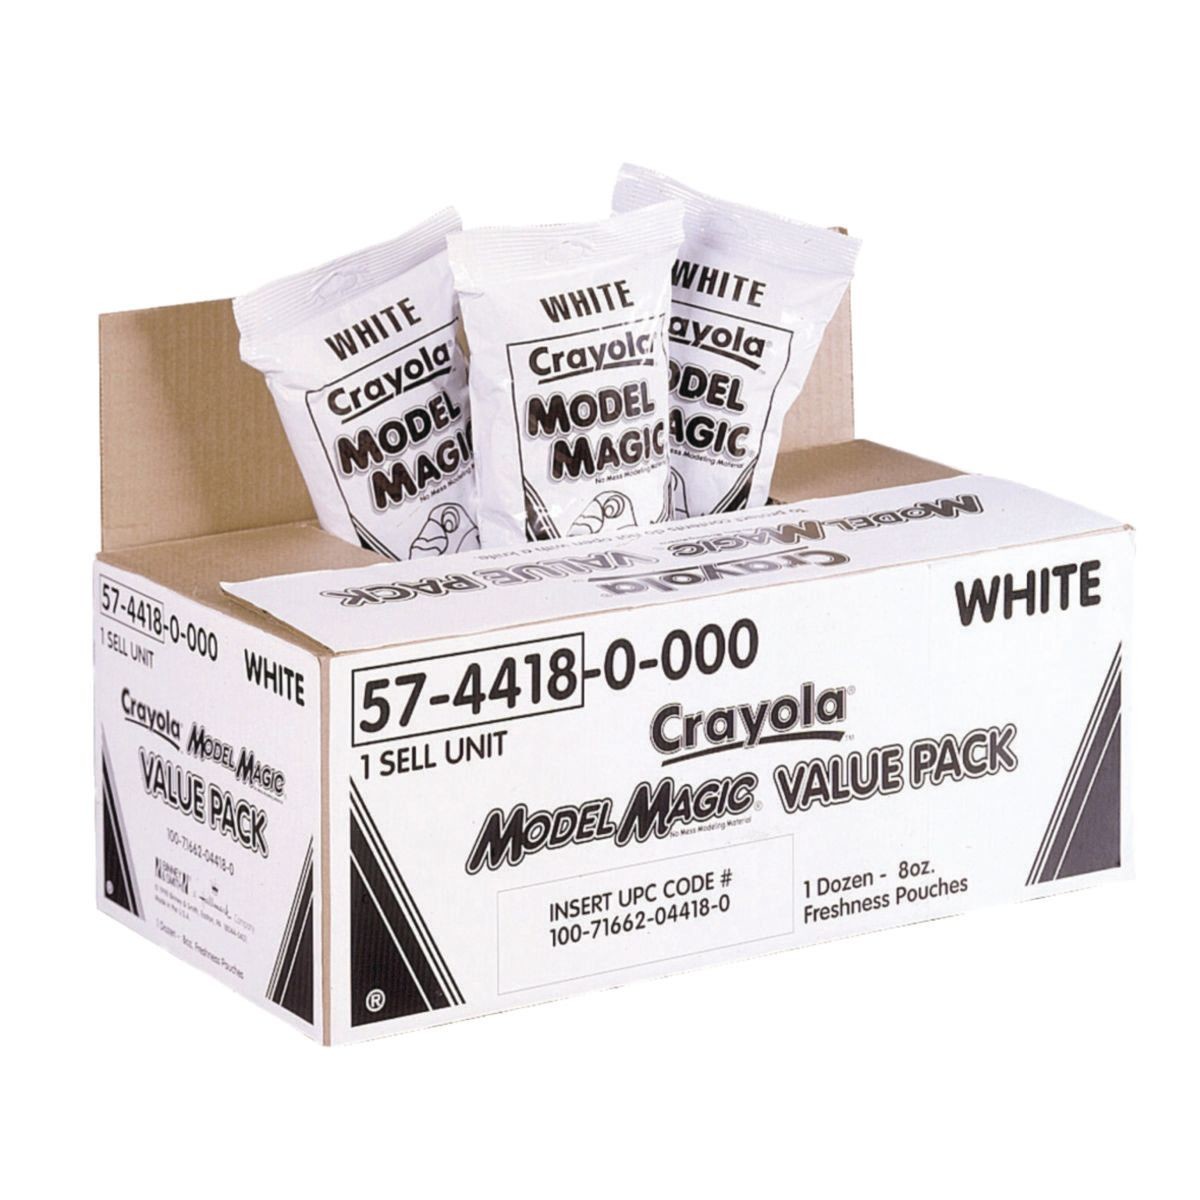  Crayola Model Magic Non-Toxic Modeling Dough Set, 3  Oz, White, Set Of 6 : Learning: Supplies